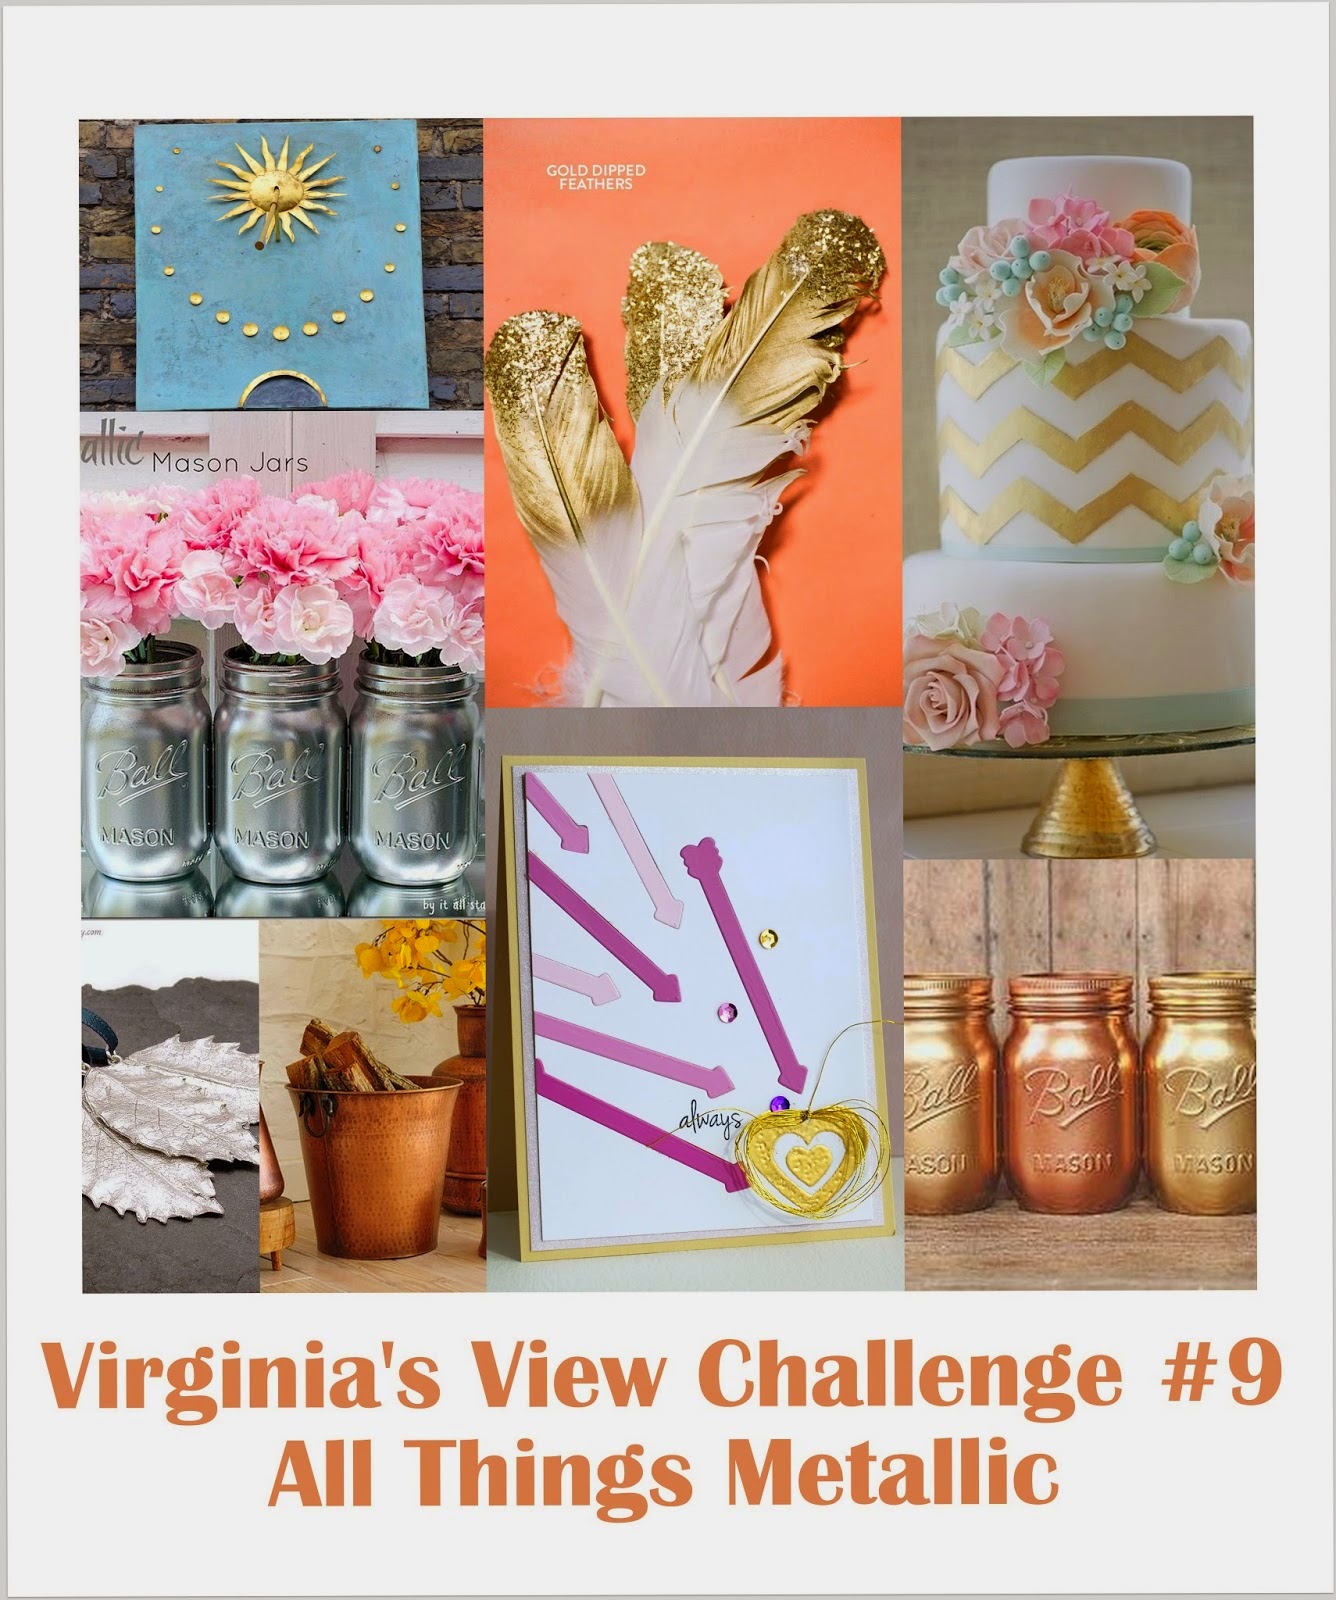 http://virginiasviewchallenge.blogspot.ca/2014/11/virginias-view-challenge-9.html